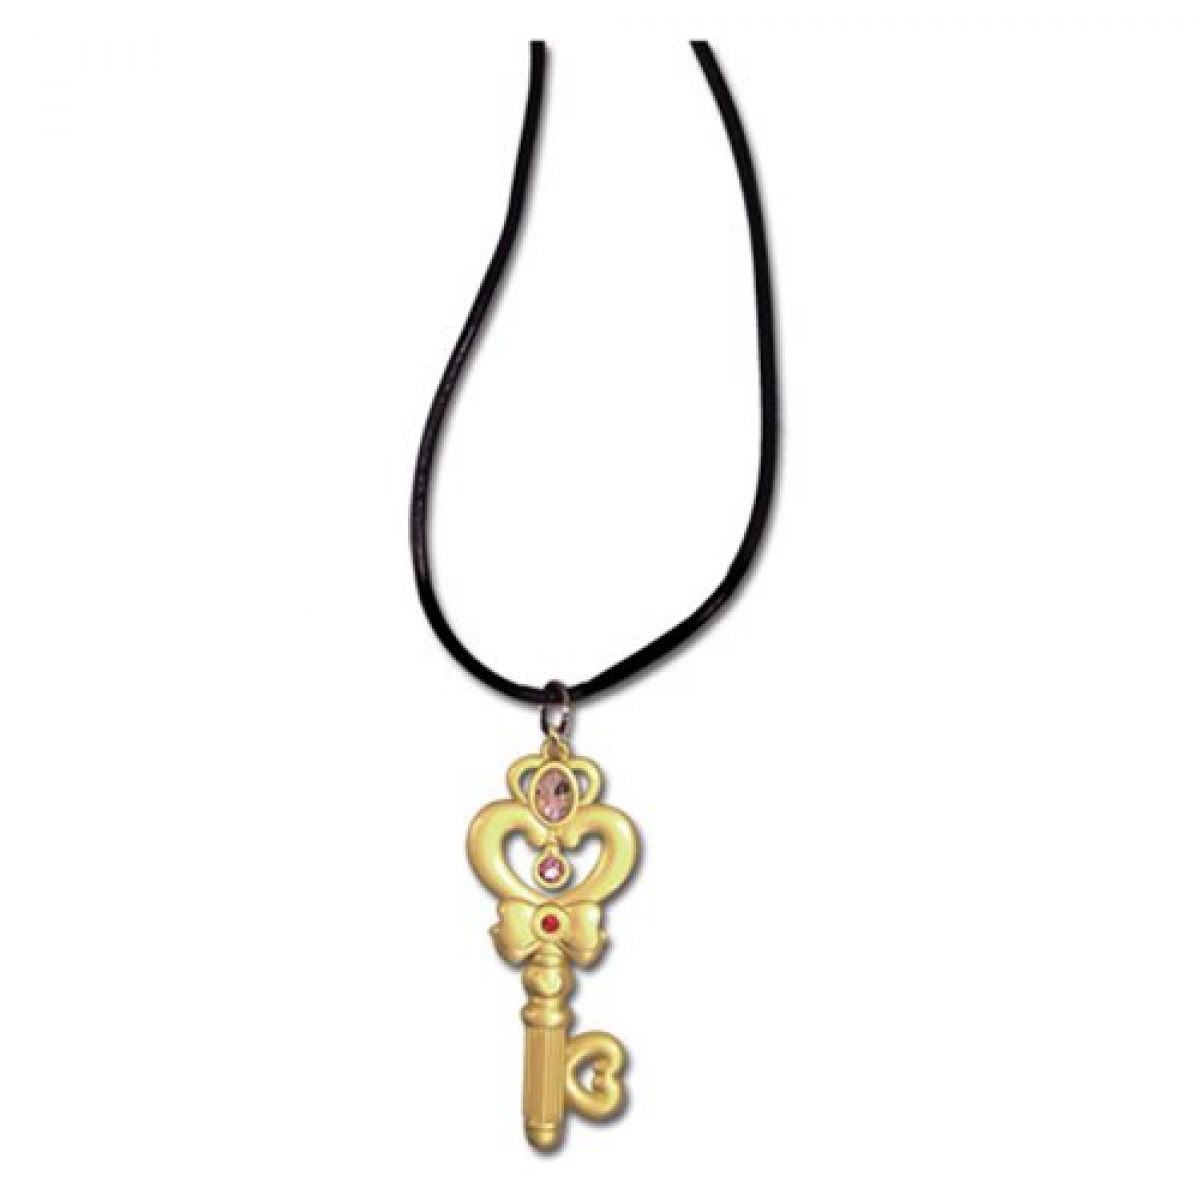 Sailor Moon Time Key Necklace